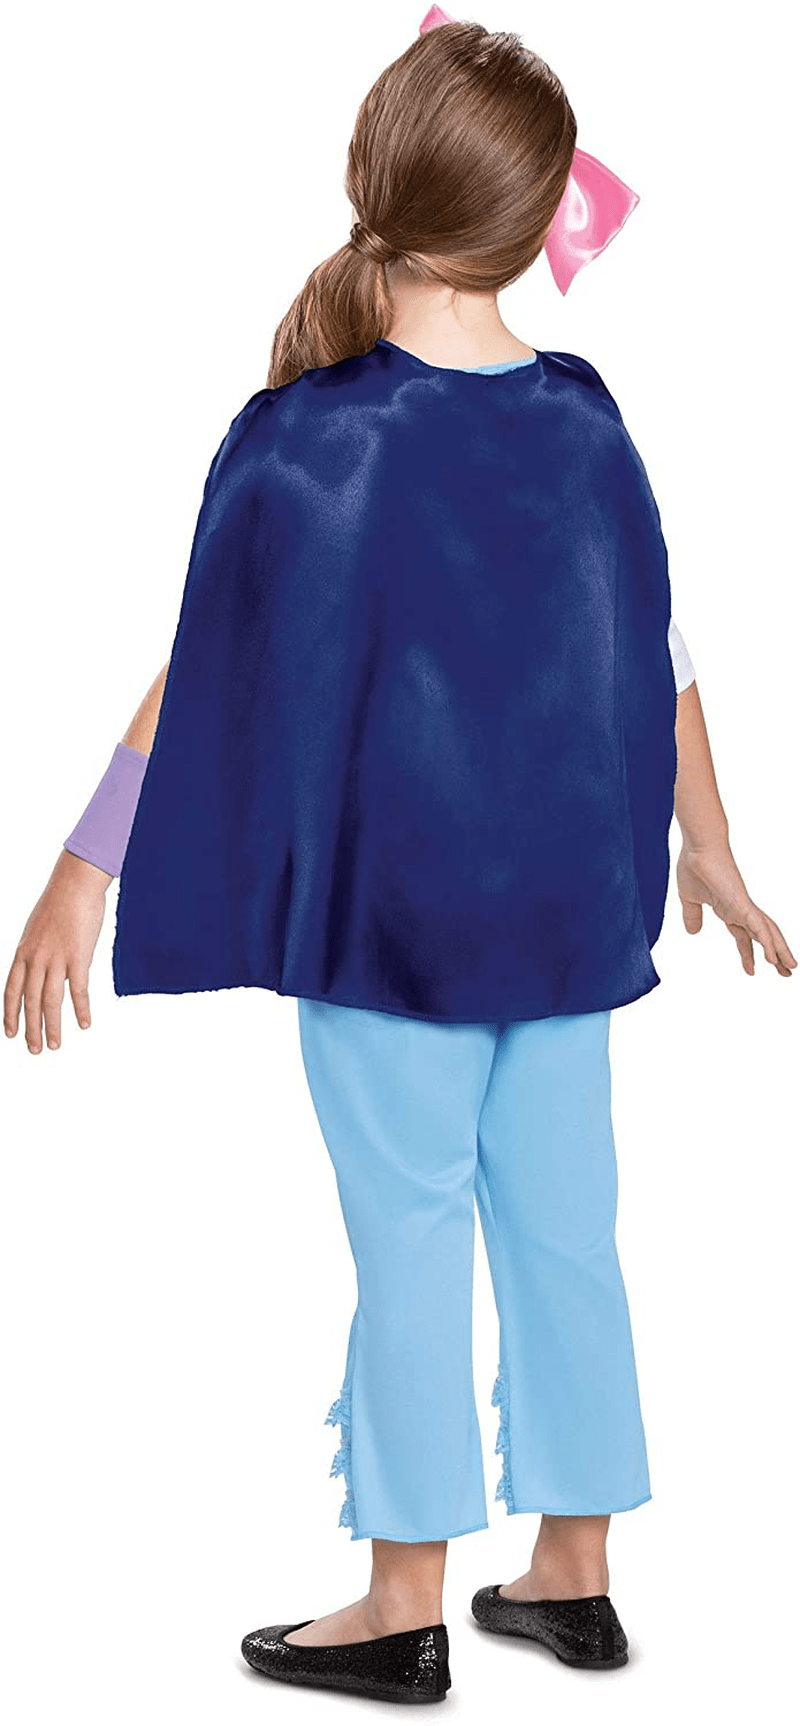 Toy Story Bo Peep Girls Classic Costume Apparel & Accessories > Costumes & Accessories > Costumes Disguise   